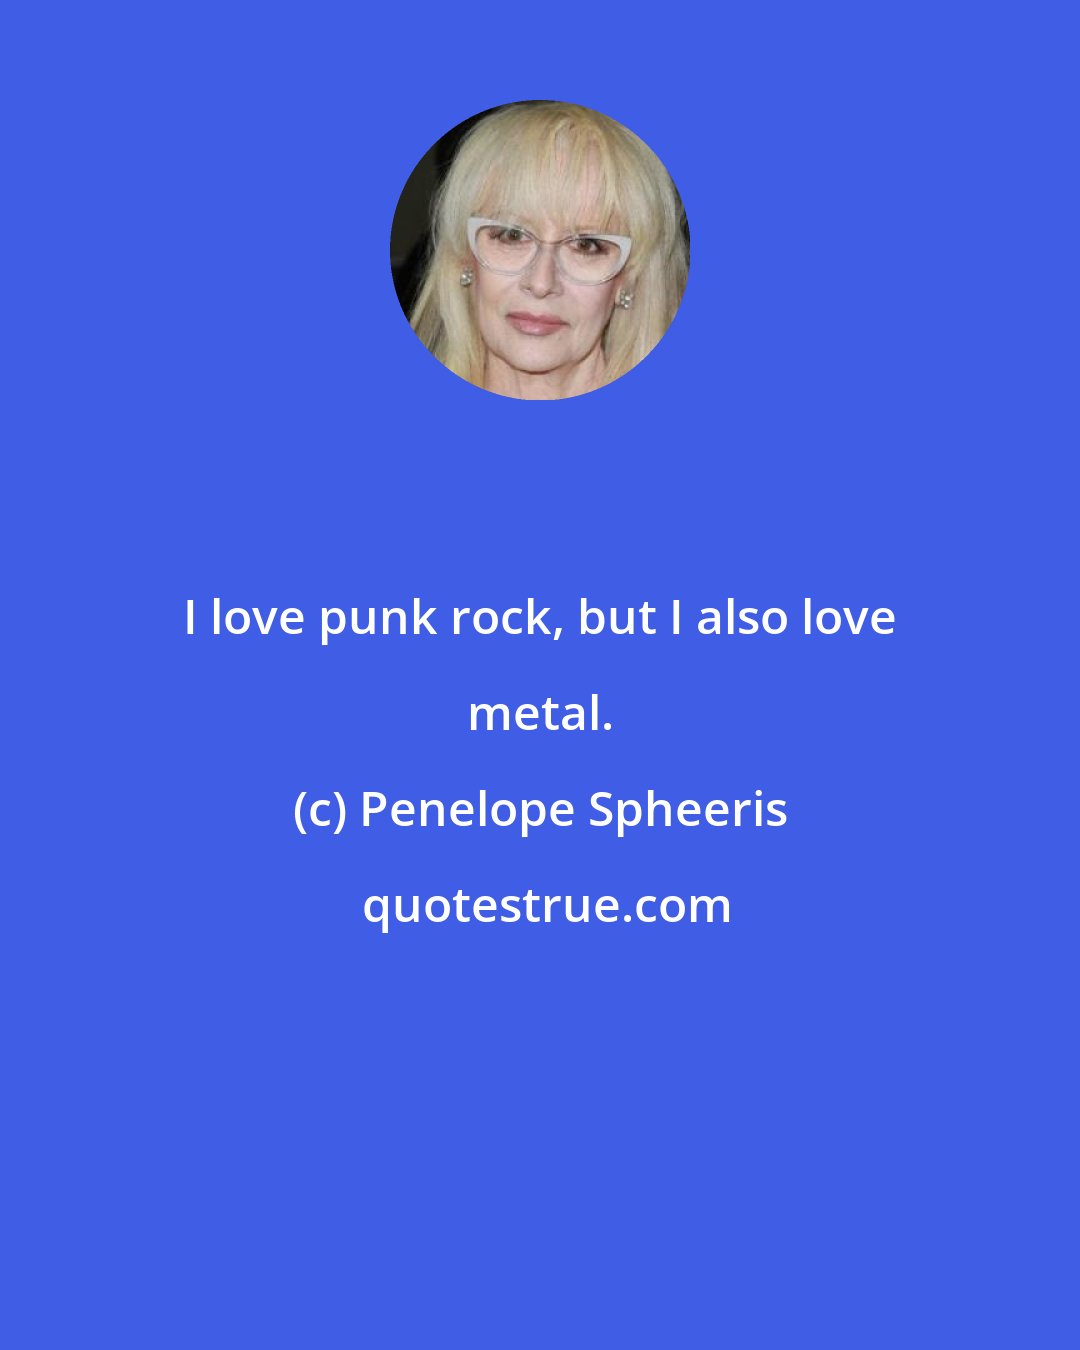 Penelope Spheeris: I love punk rock, but I also love metal.